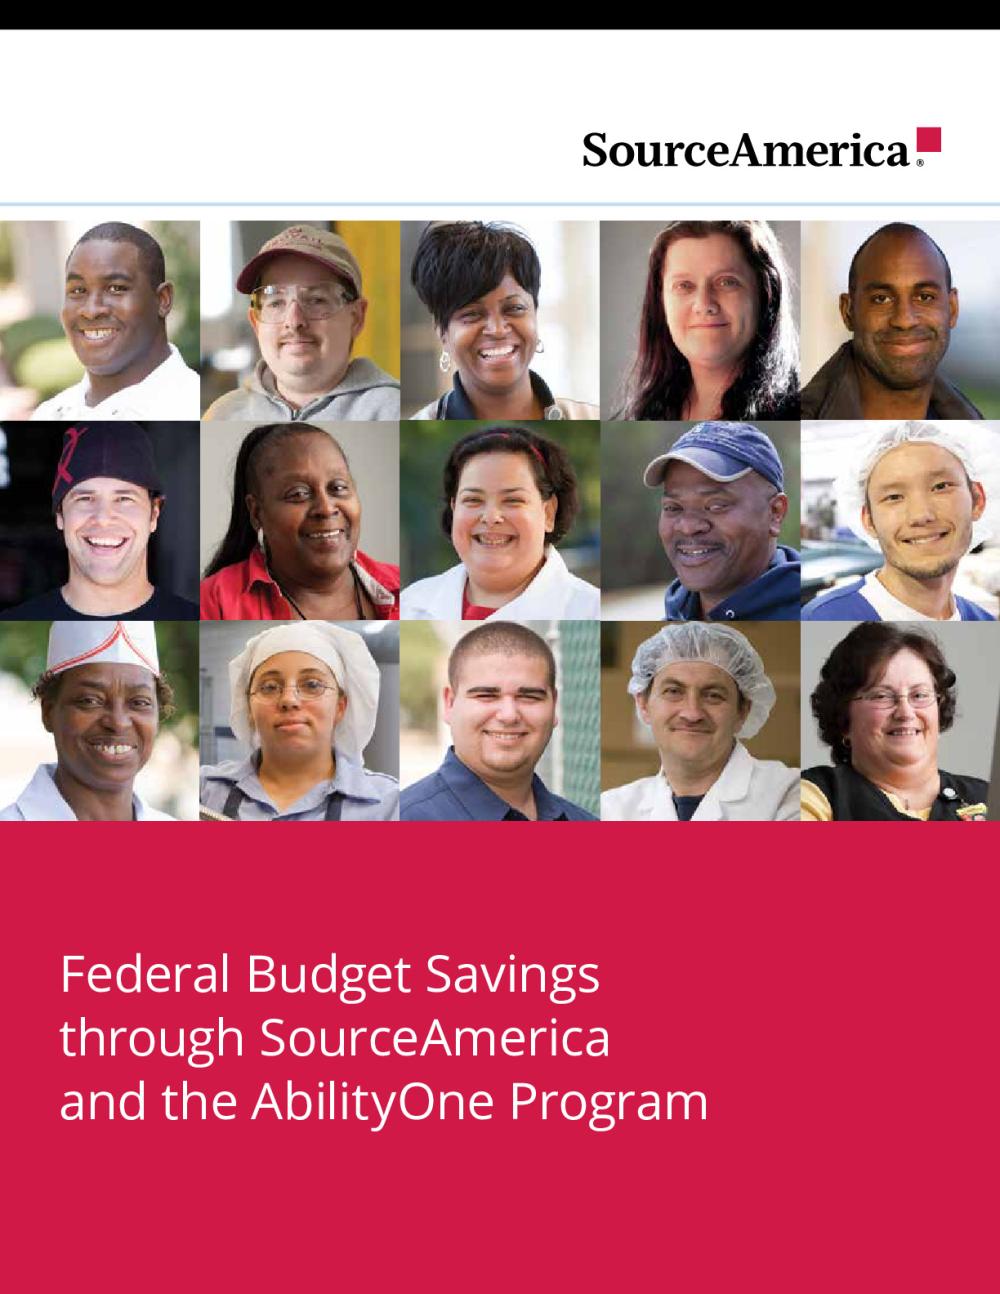 Federal Budget Savings through SourceAmerica and the AbilityOne Program